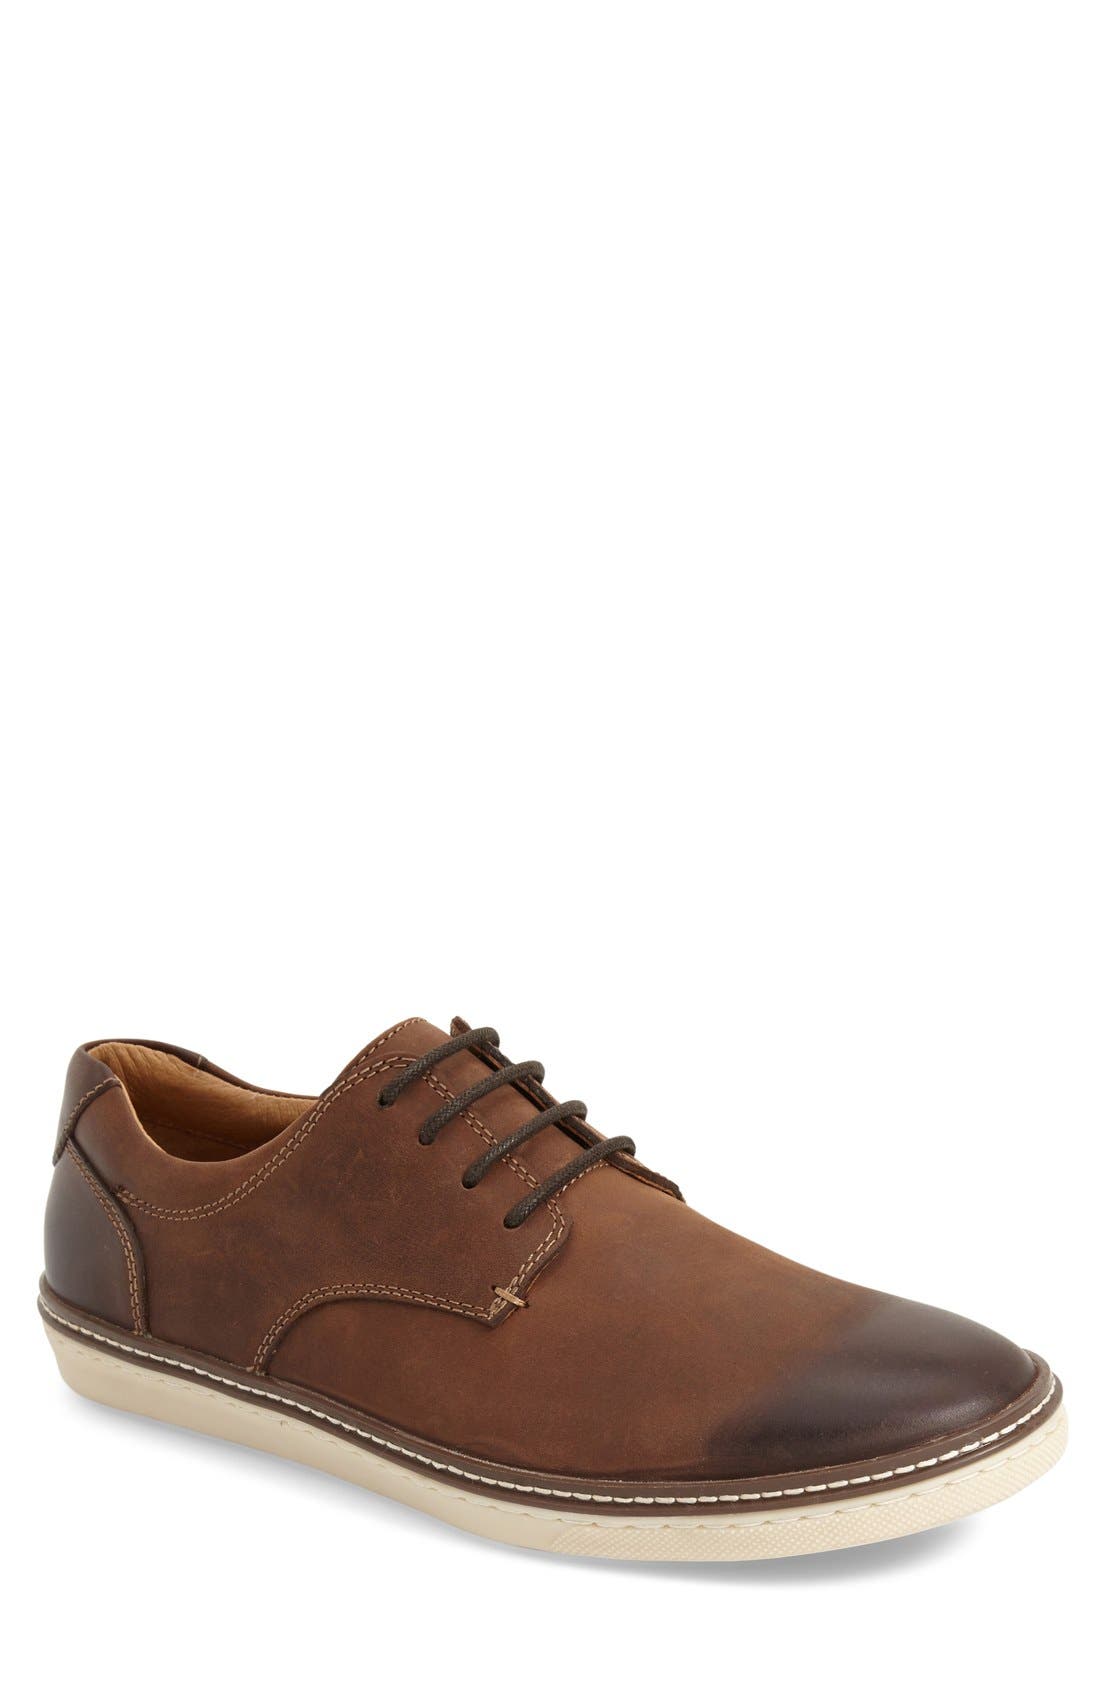 Buy > johnston & murphy men's casual shoes > in stock